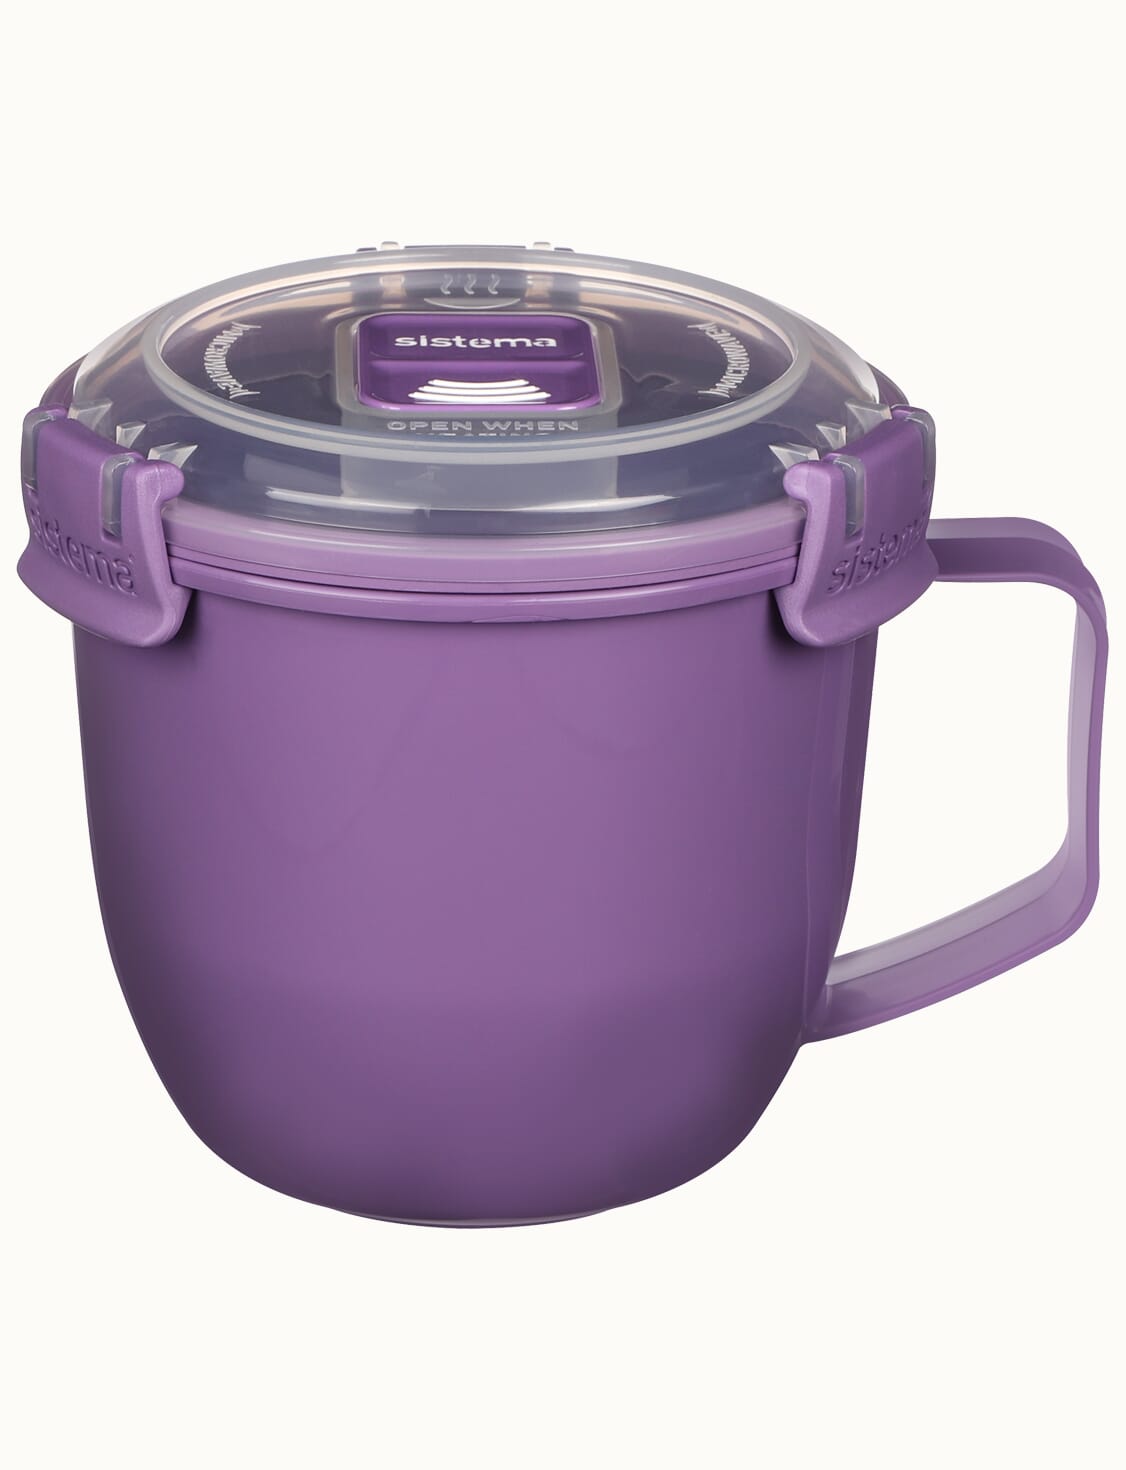 565ml Small Soup Mug Colour-Misty Purple